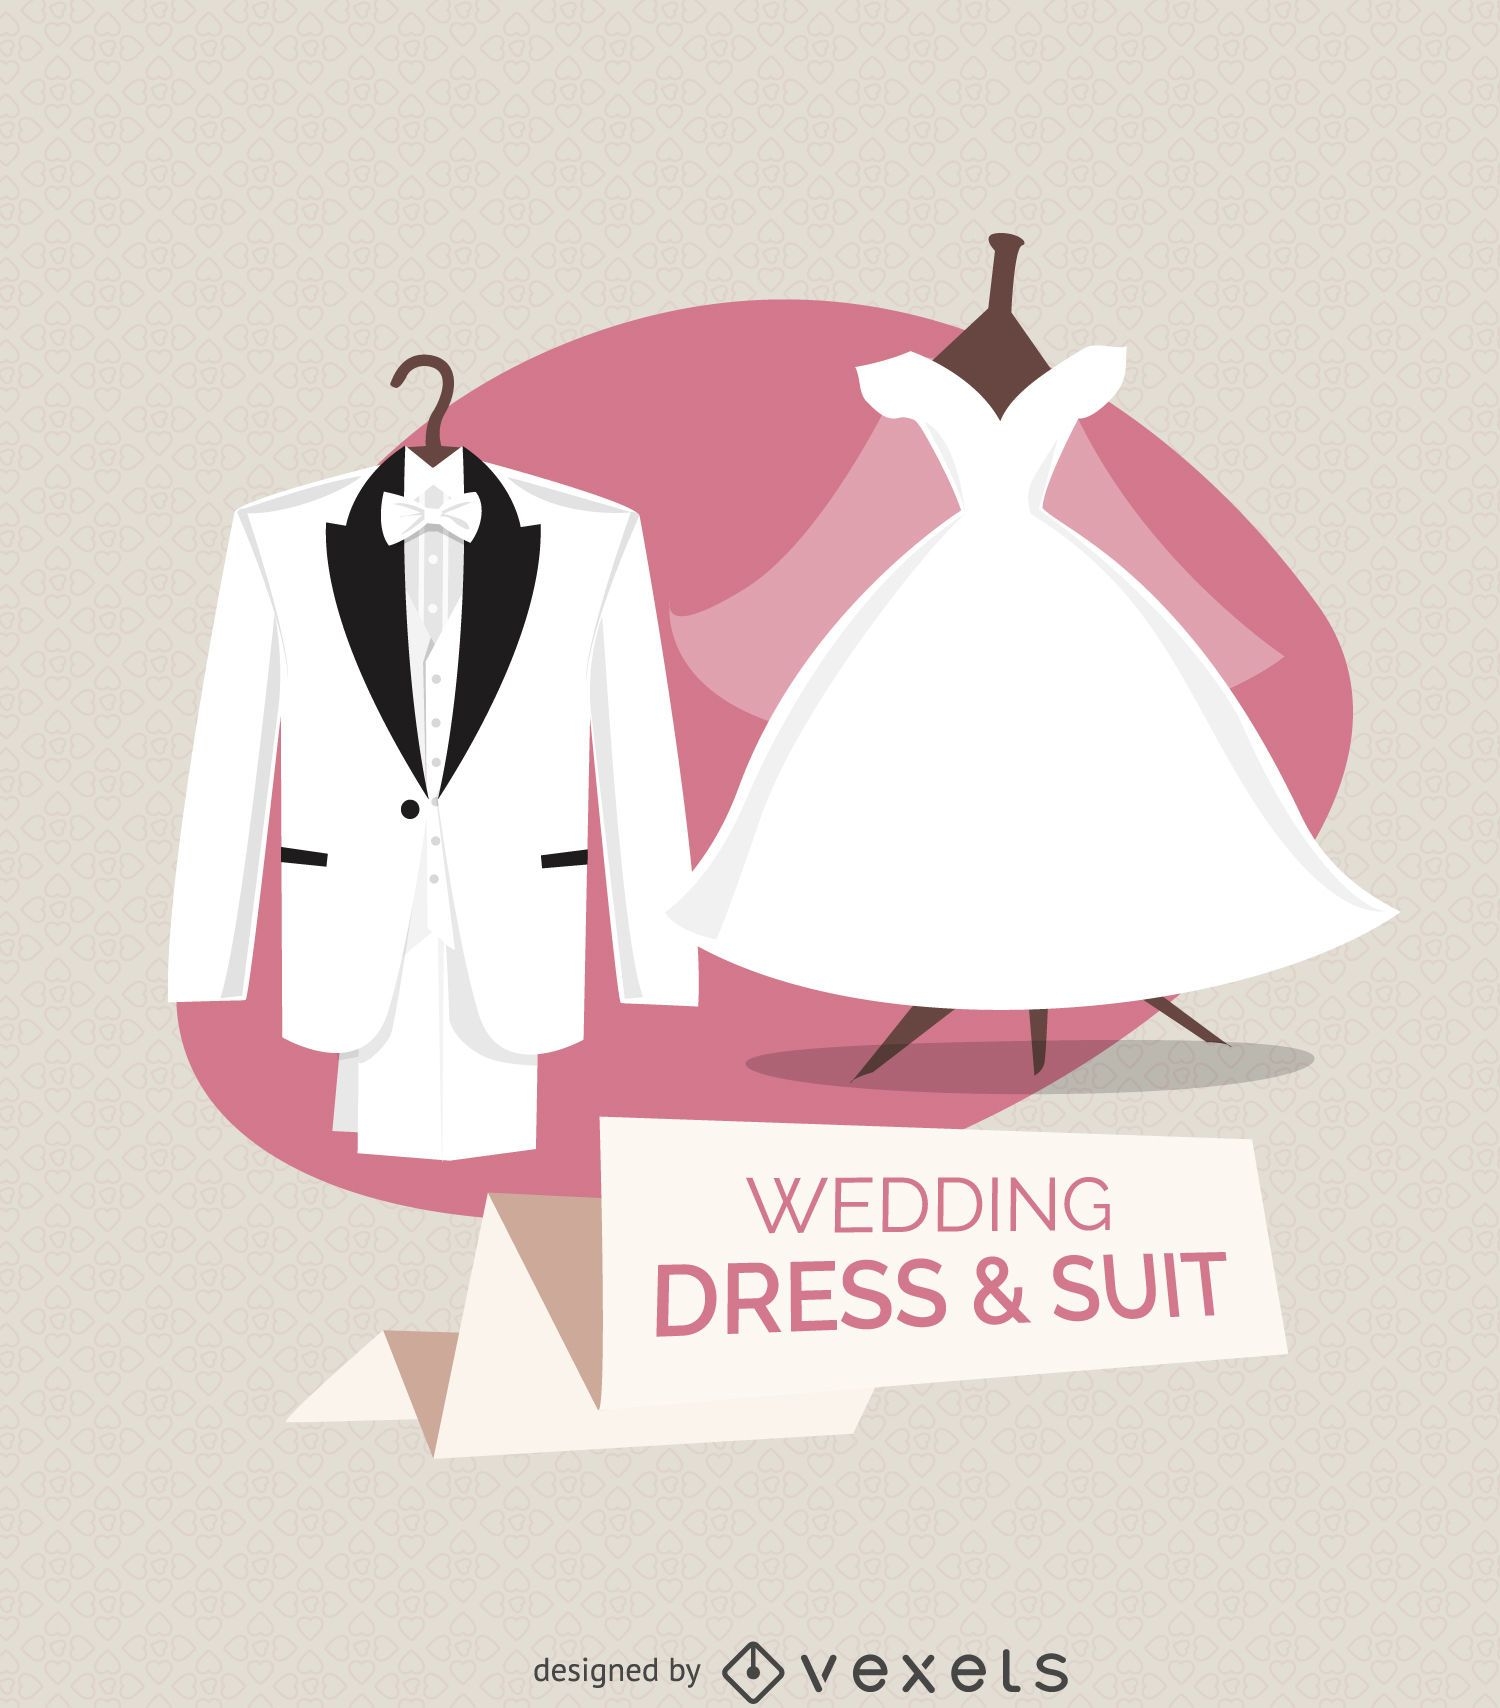 Wedding dress and suit illustration